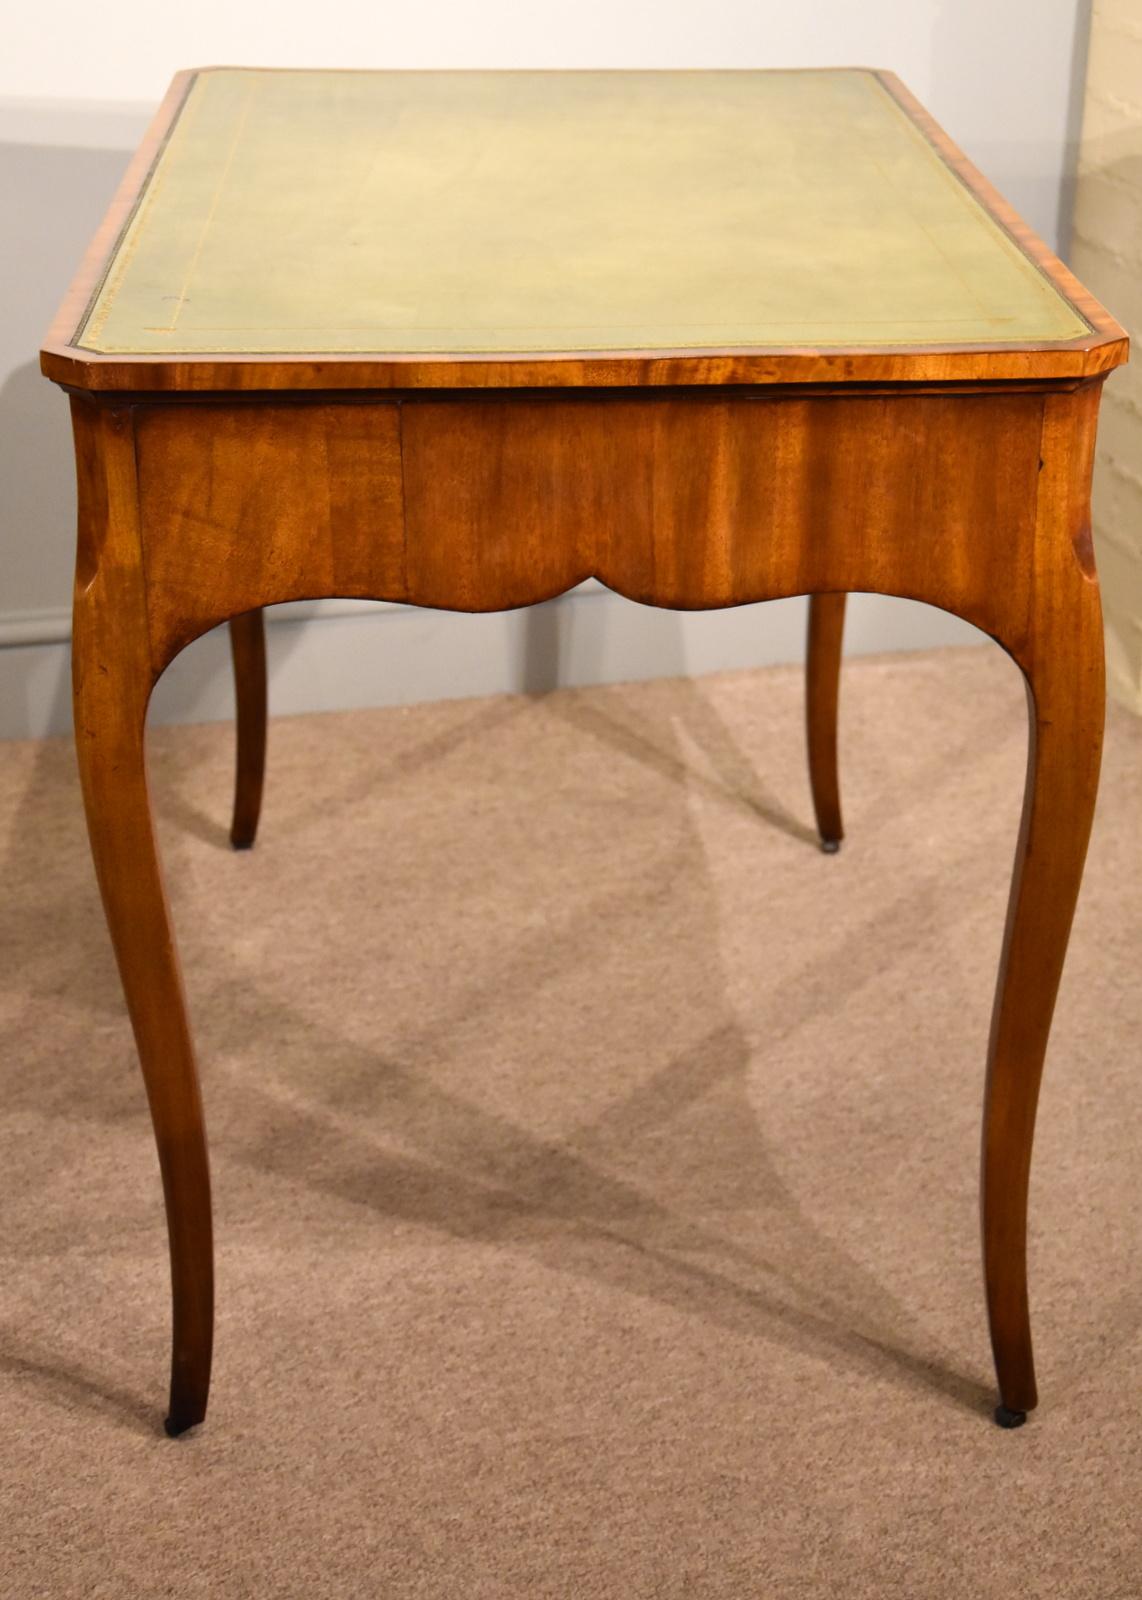 Good 18th Century Hepplewhite Period Writing Table 1